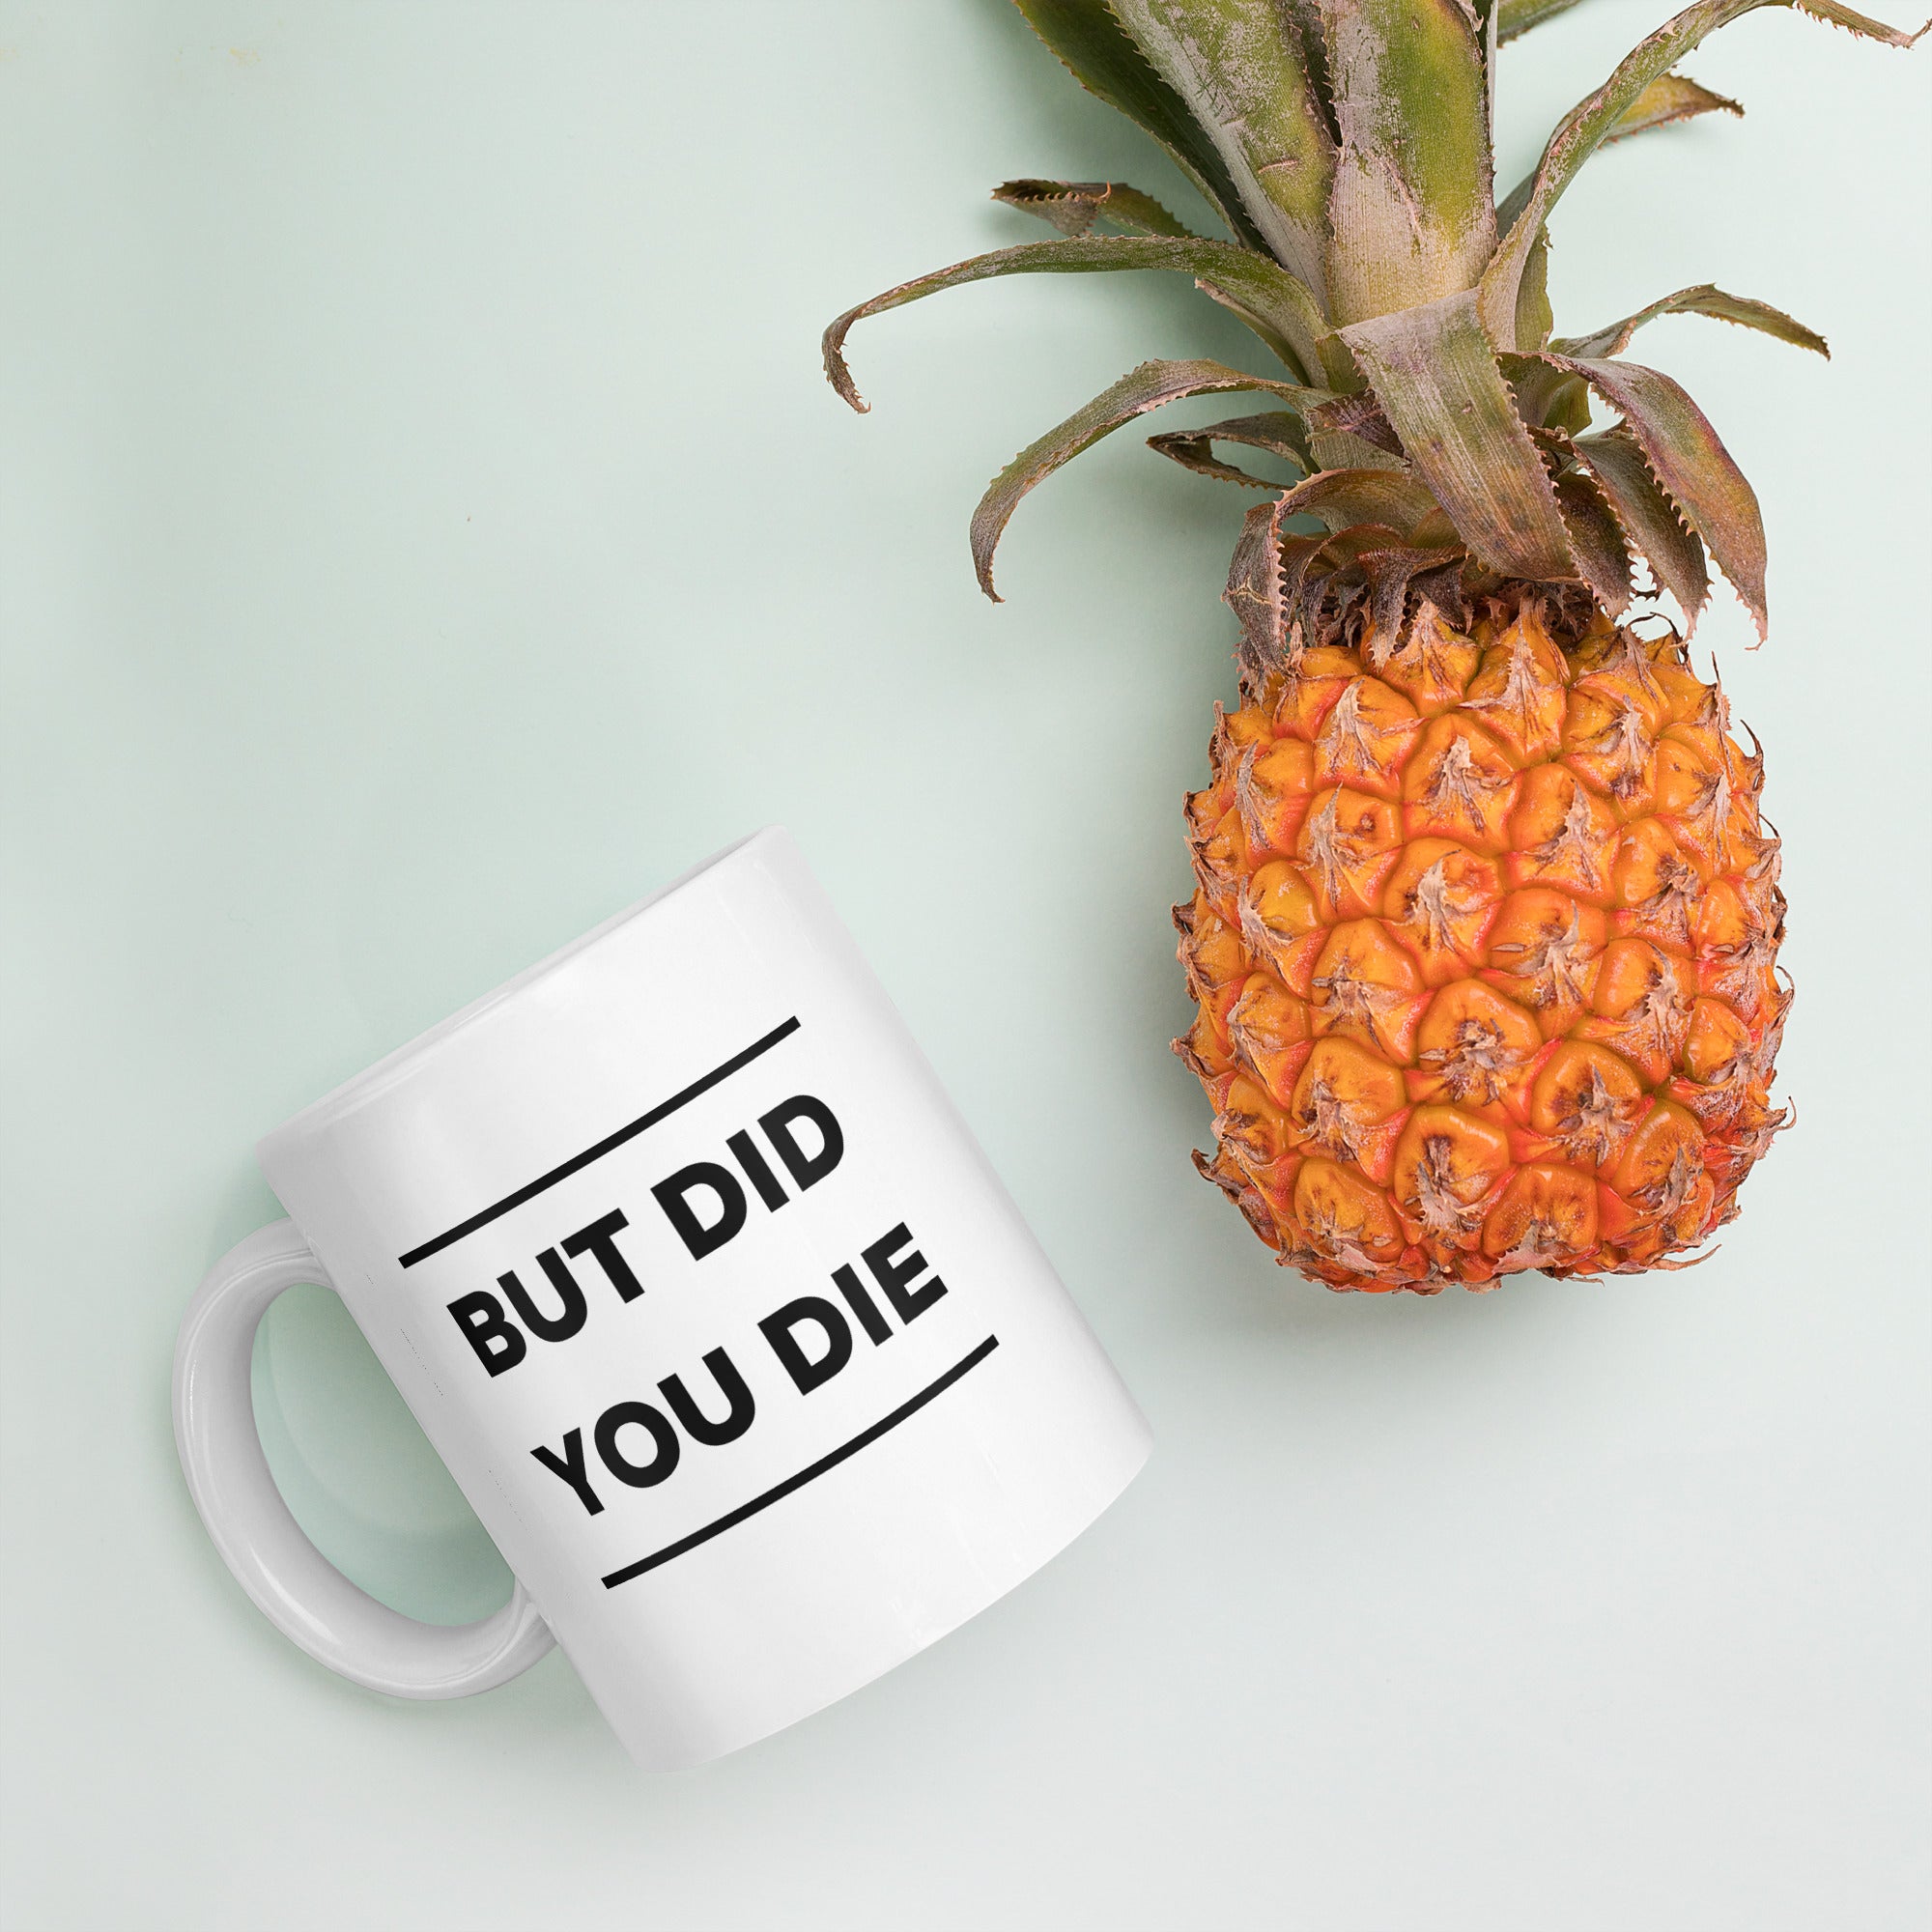 But Did You Die? - White Glossy Mug